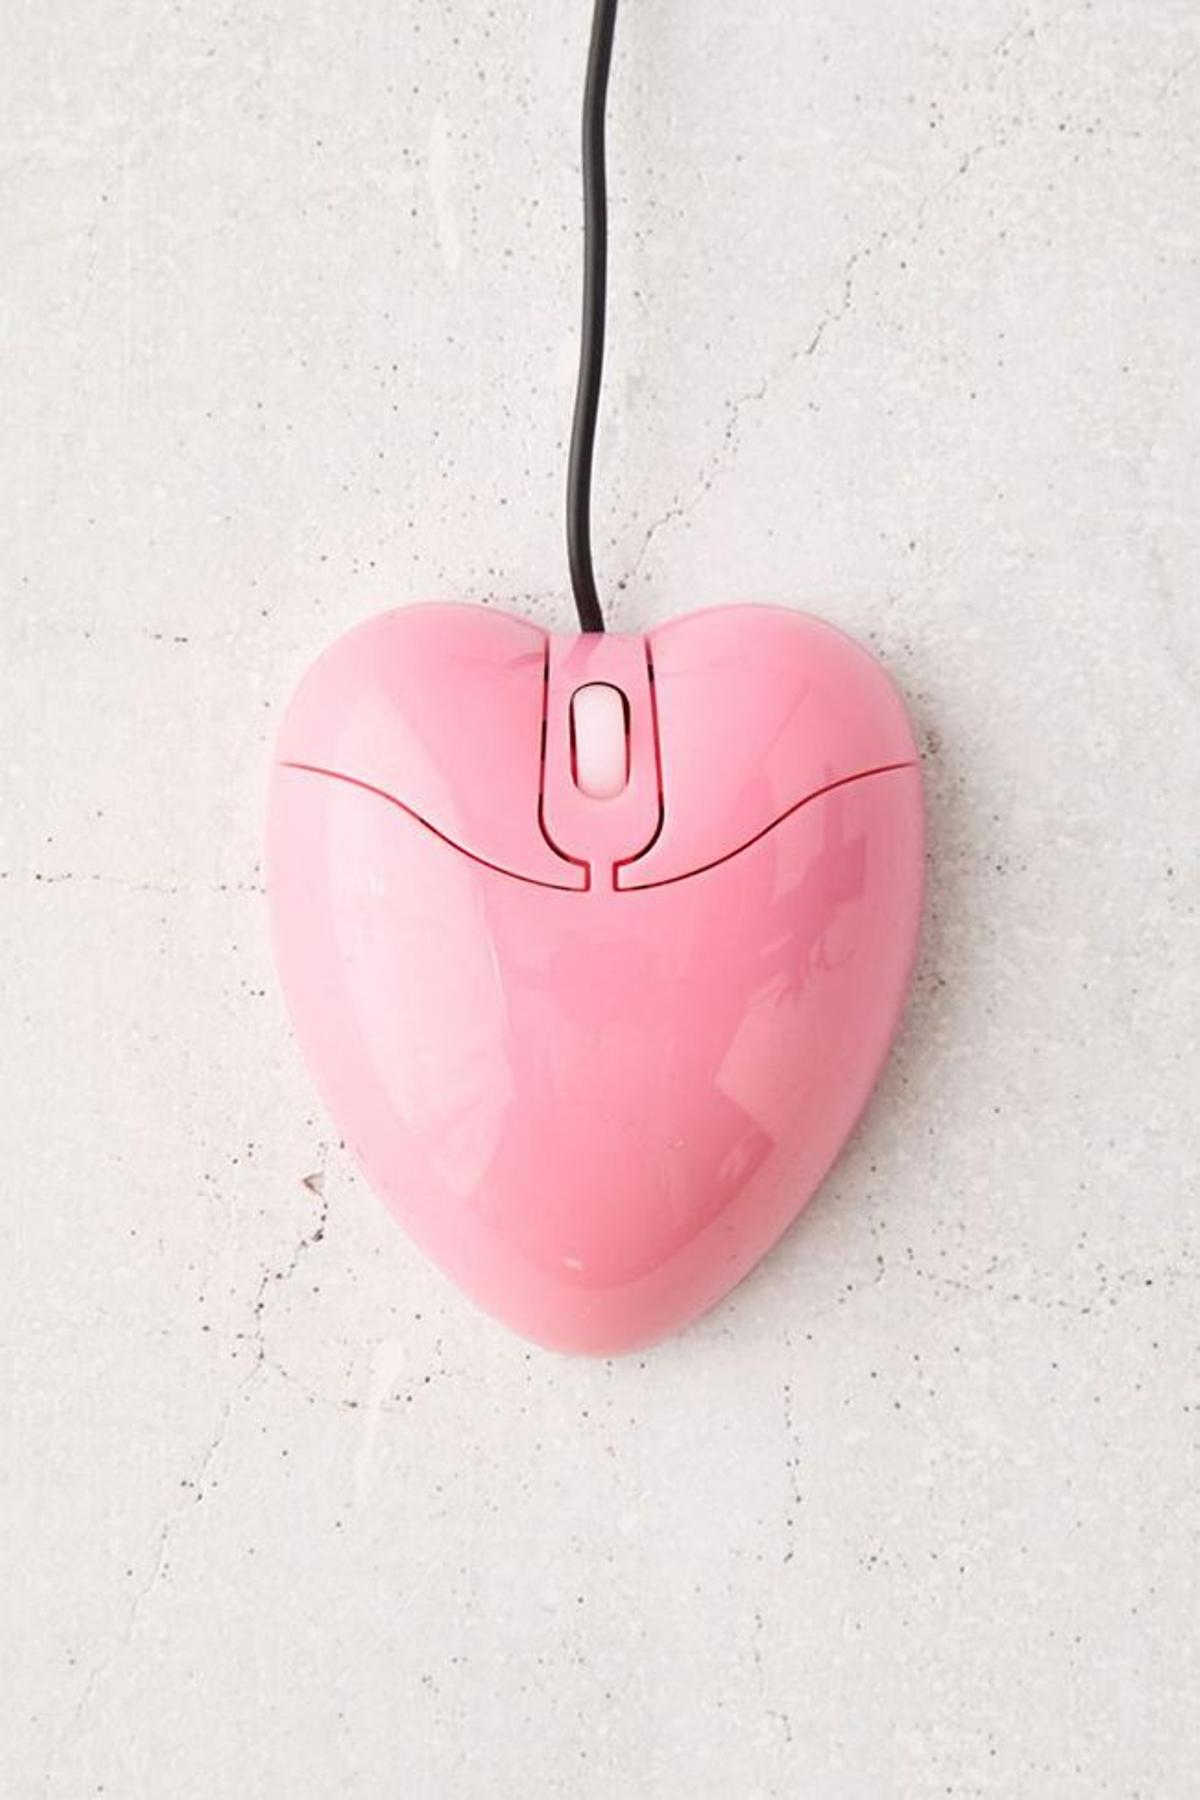 Un ratón con forma de corazón